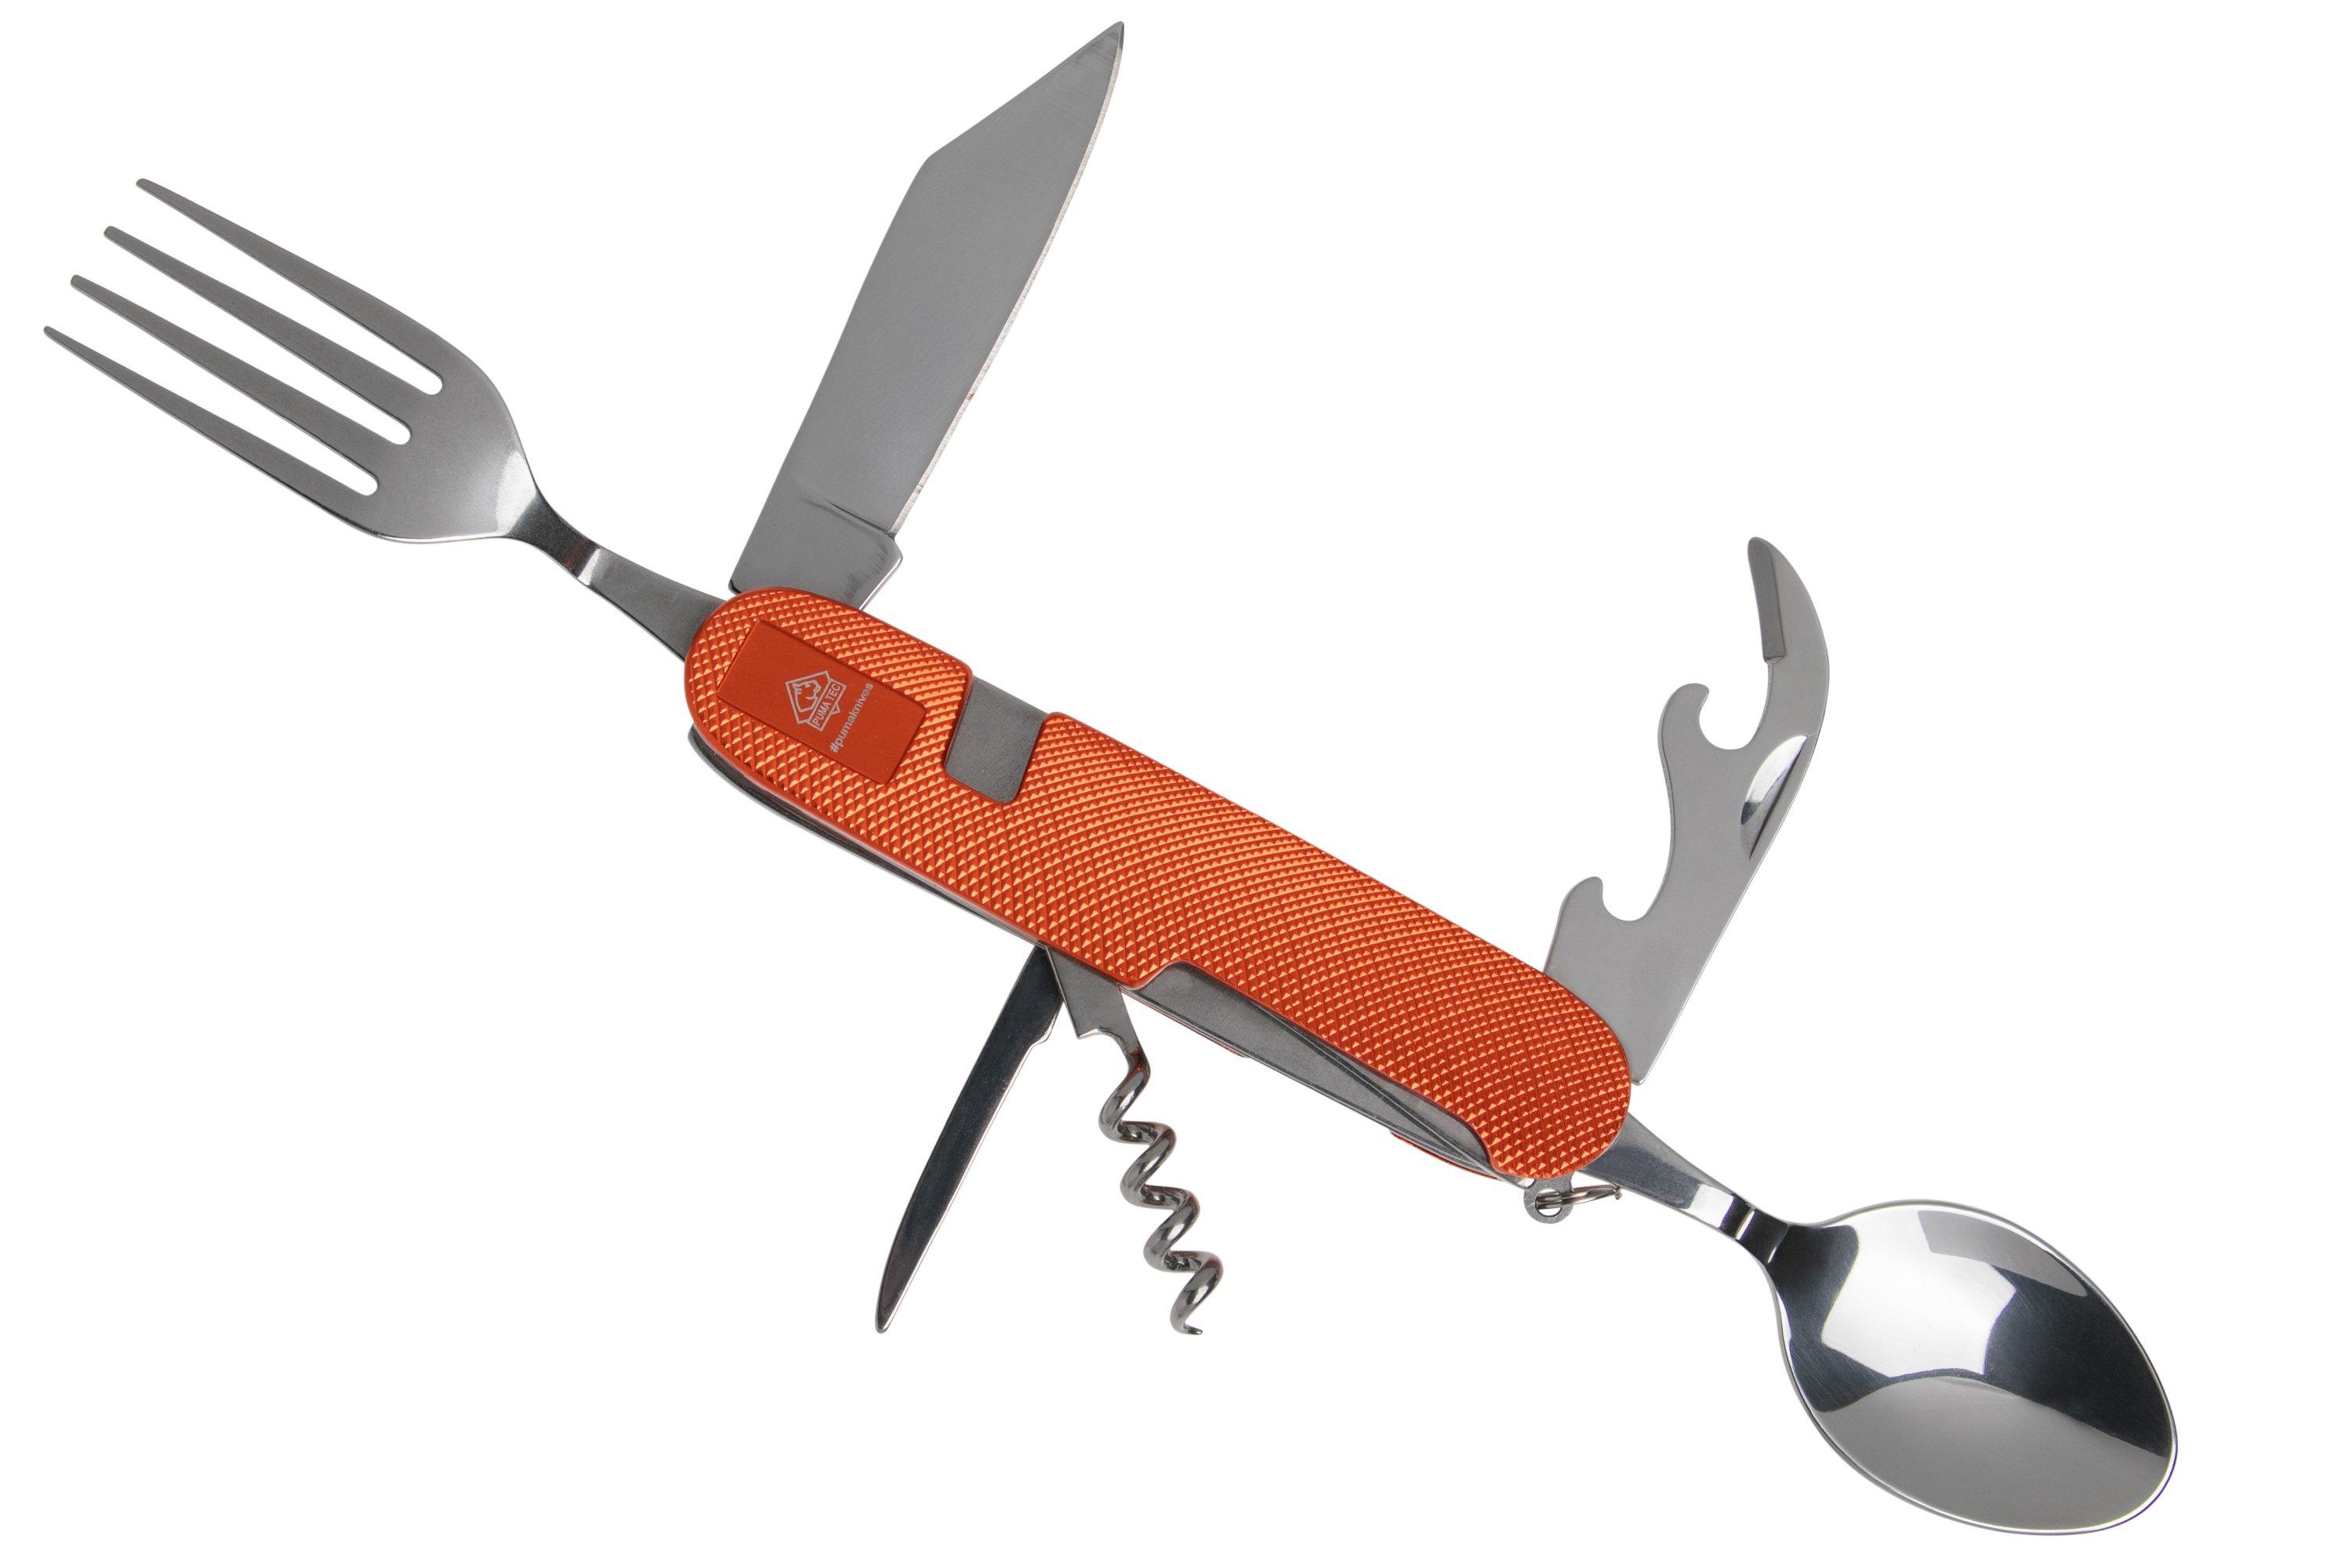 PUMA TEC Tool Orange 7285001, Swiss pocket knife | Advantageously shopping at